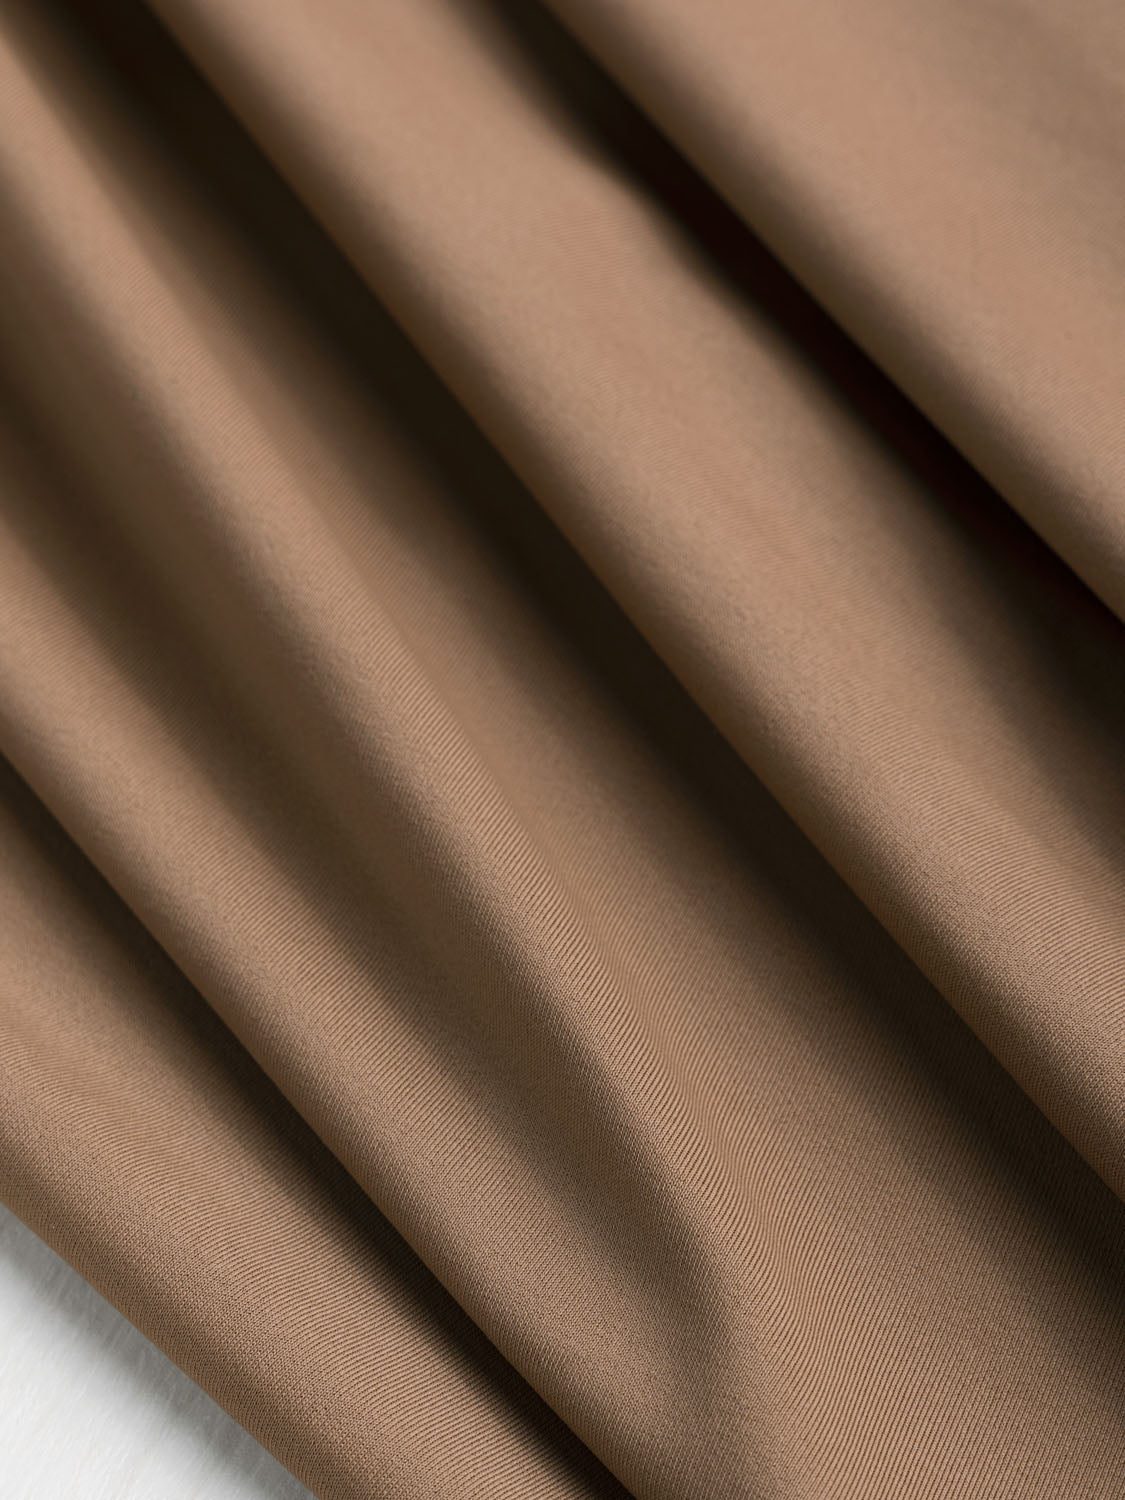 Delicate neutral beige/tan stripe muslin fabric, lightweight crepe